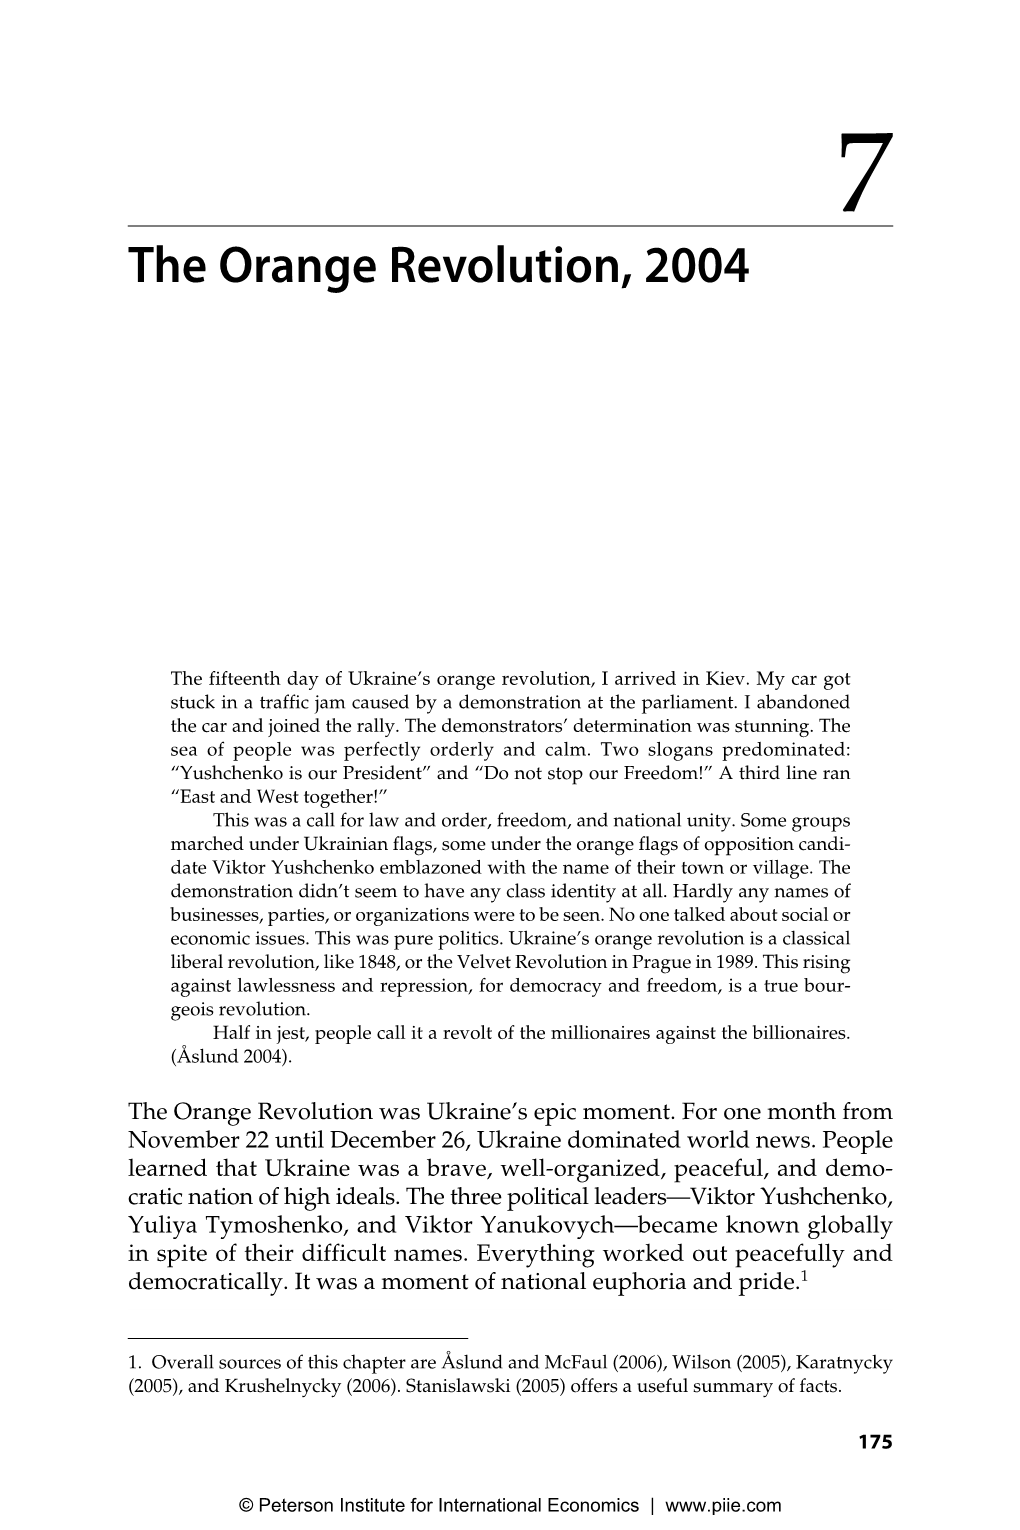 The Orange Revolution, 2004